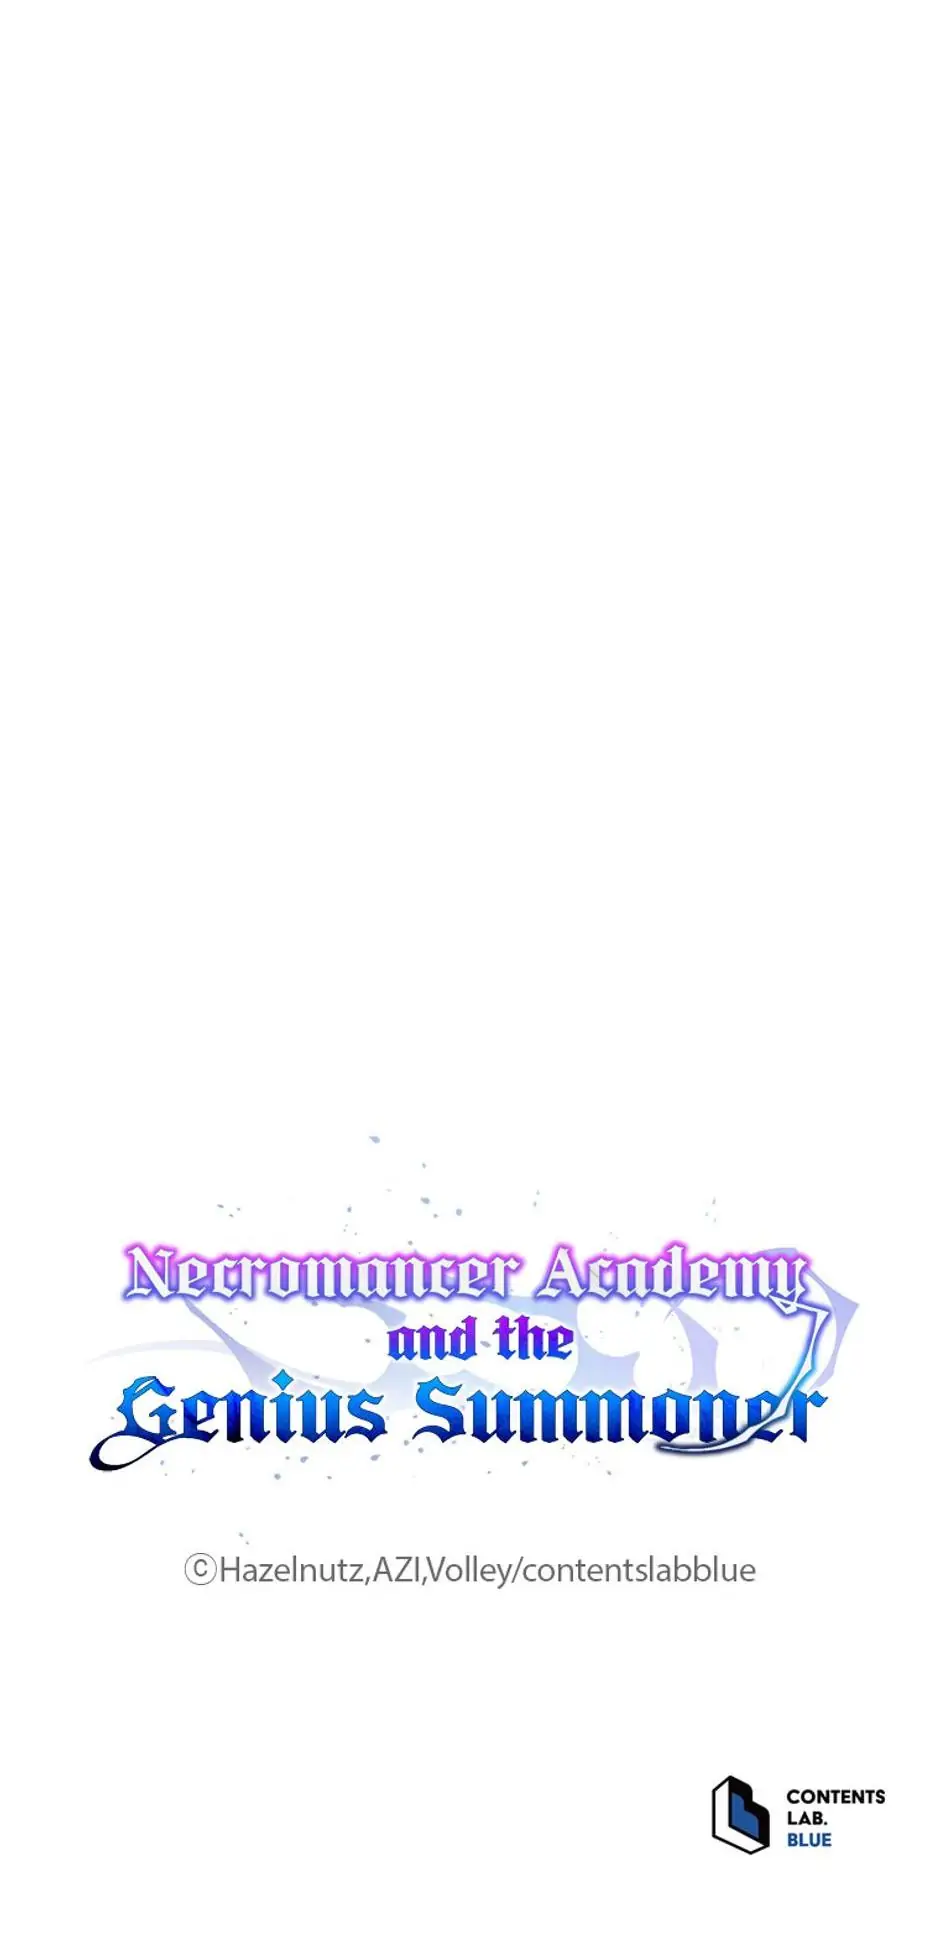 Necromancer Academy And The Genius Summoner - 6 page 88-b0993ba4